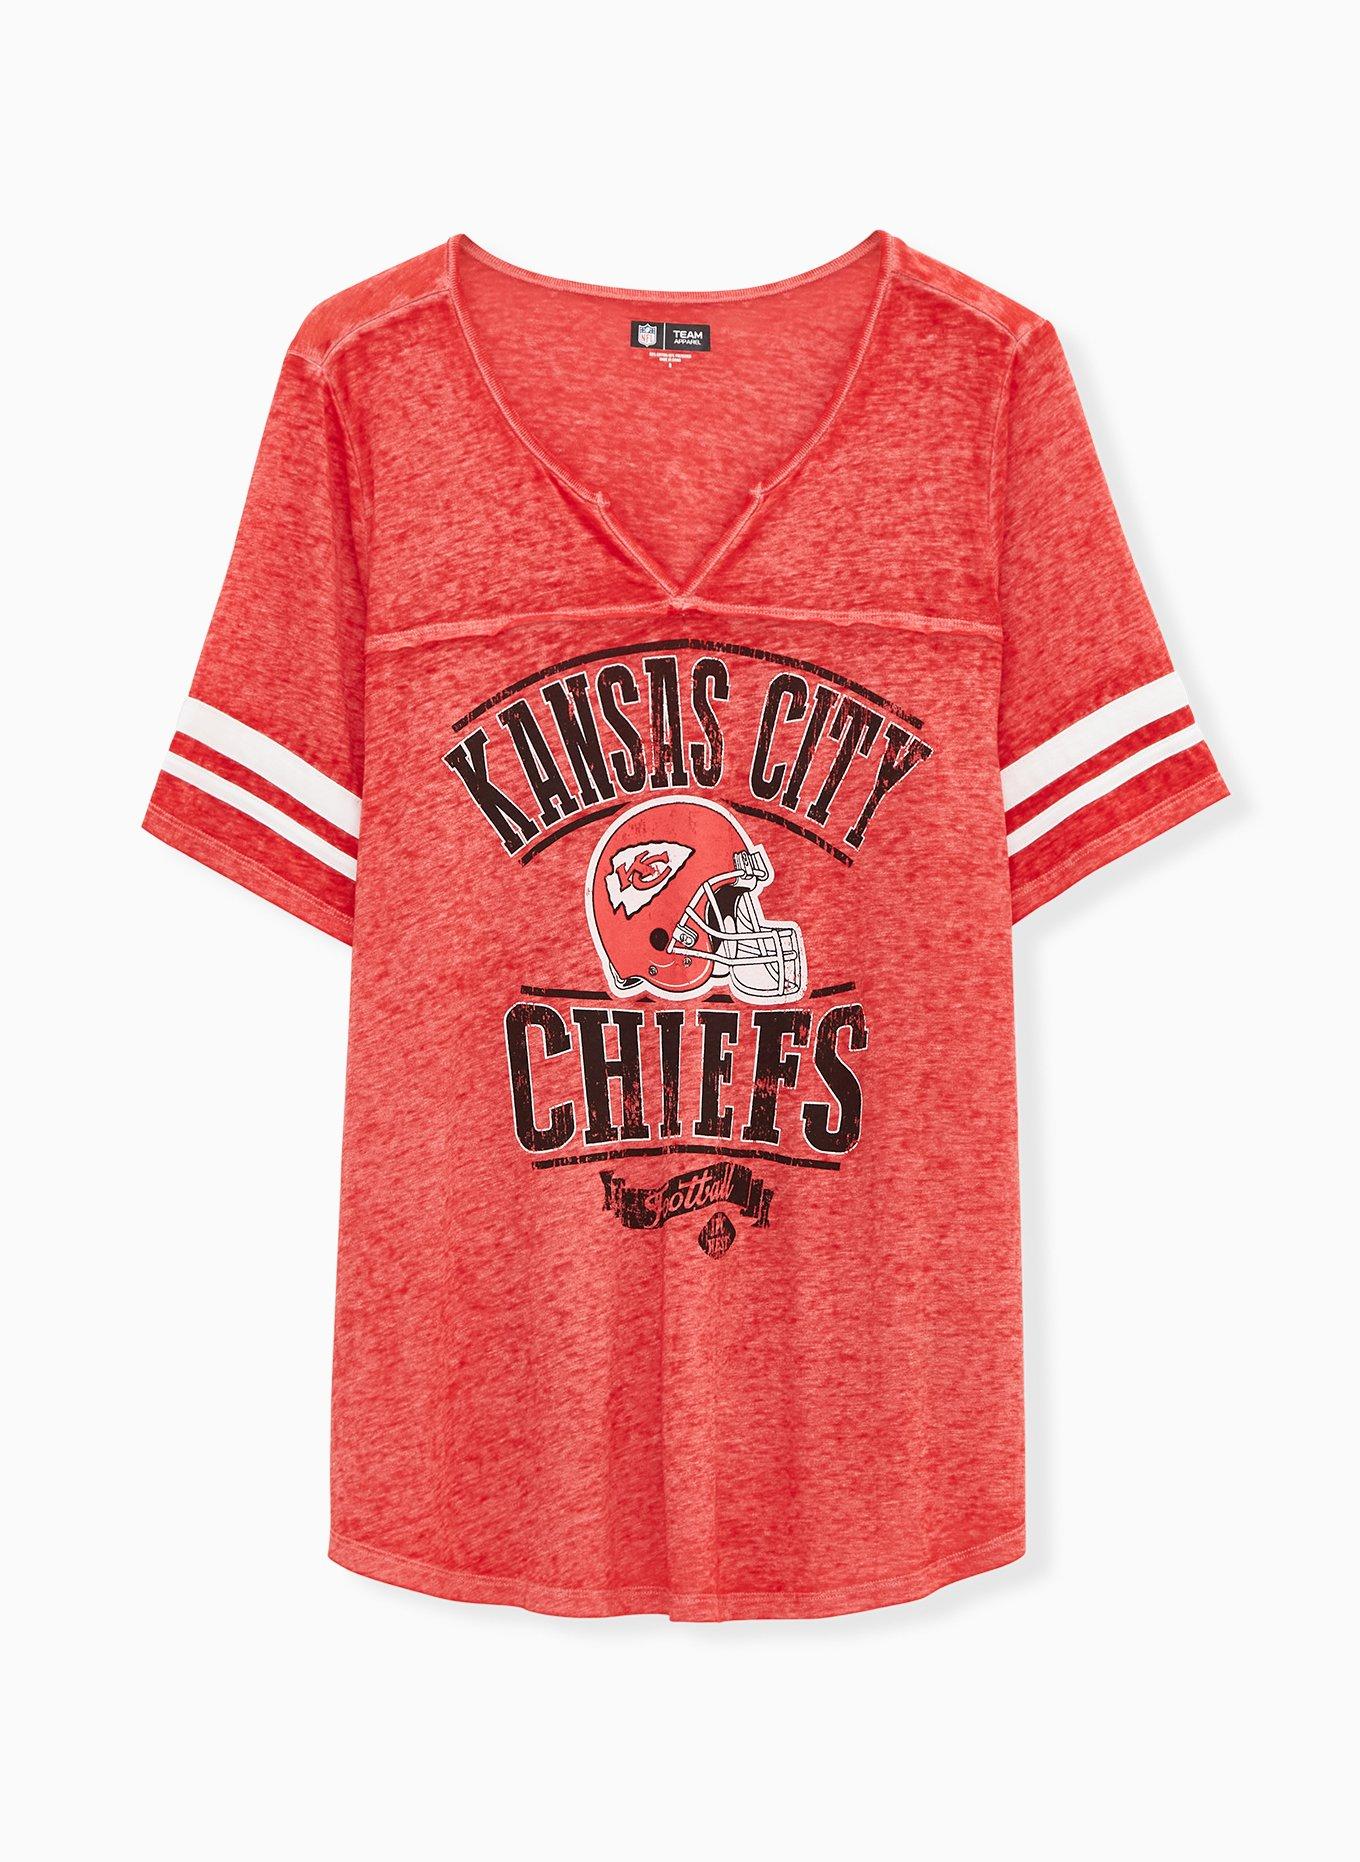 New Era Women's Kansas City Chiefs Sporty Crop Red Plus Size Long Sleeve T- Shirt